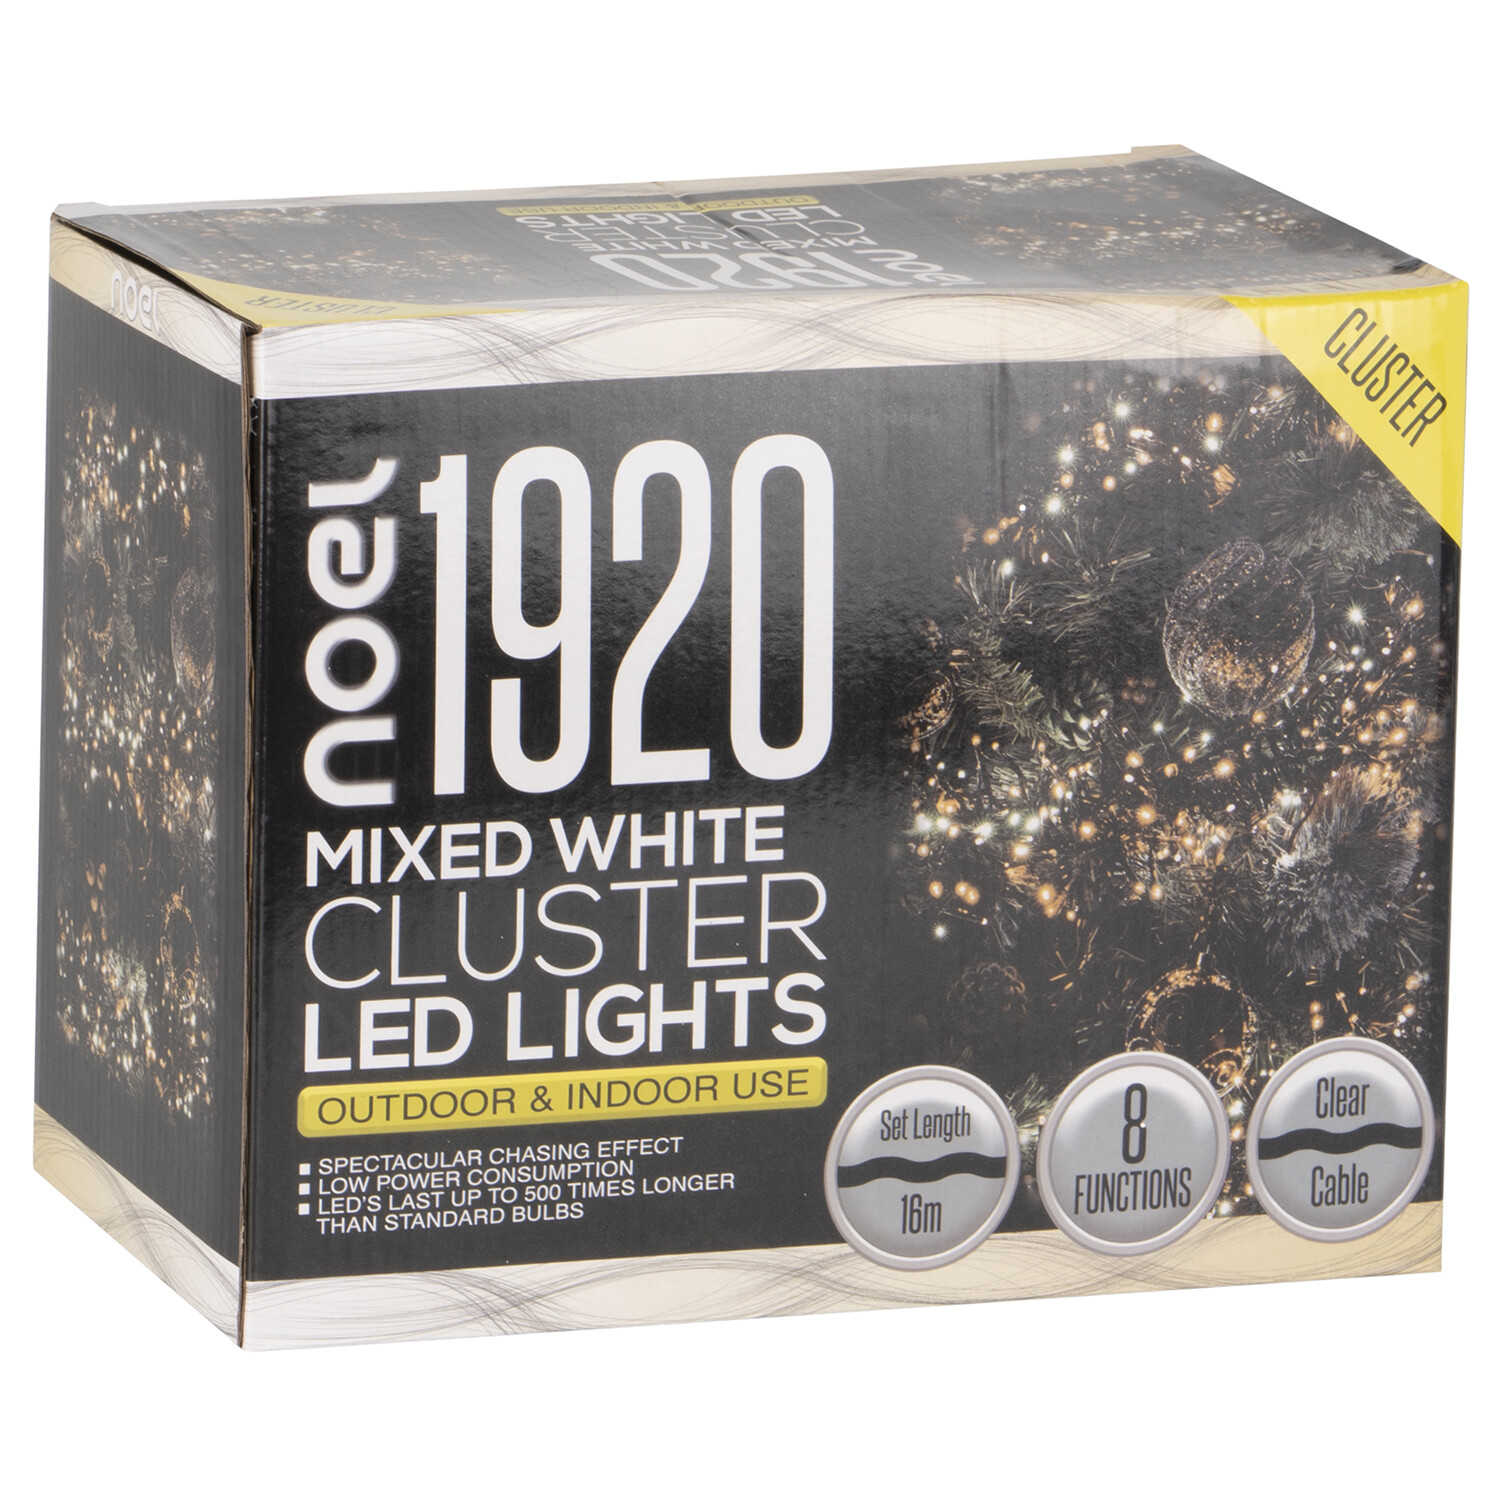 Cluster LED Lights - Mixed White / 1920 Image